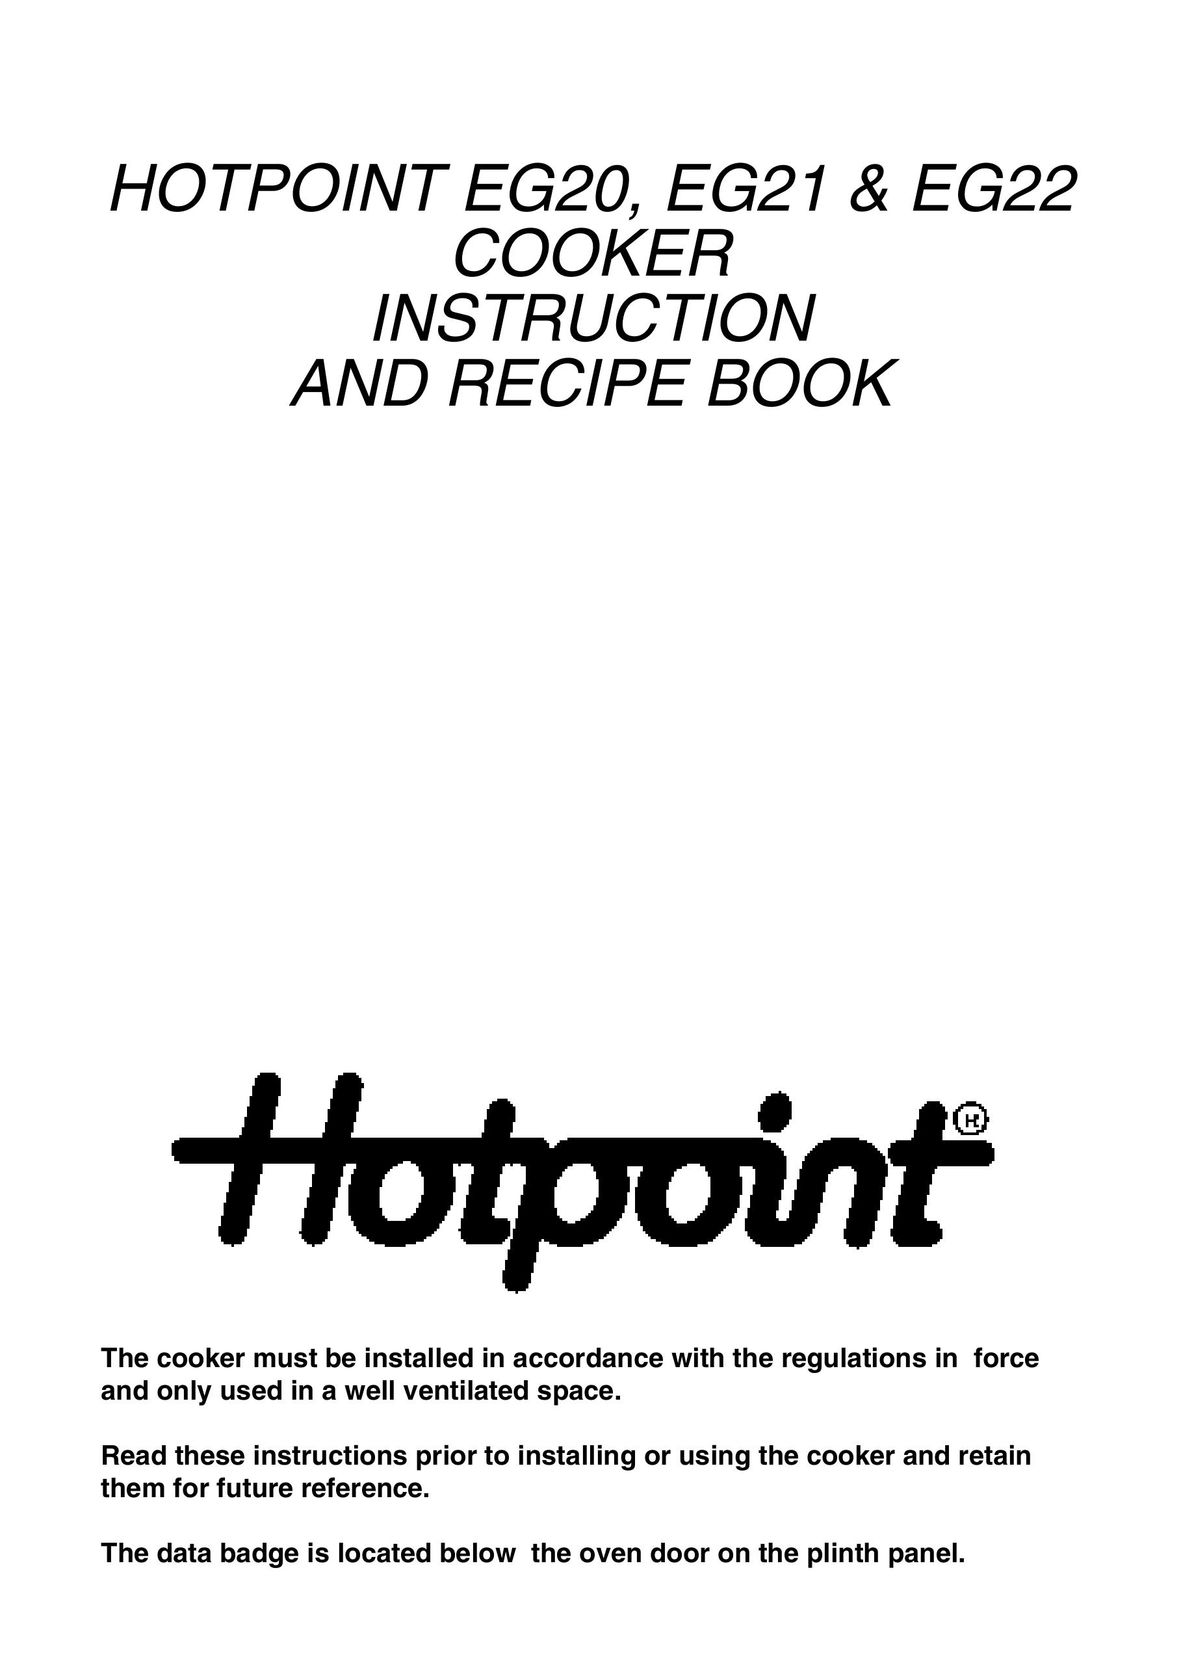 Hotpoint EG21 & EG22 Electric Pressure Cooker User Manual